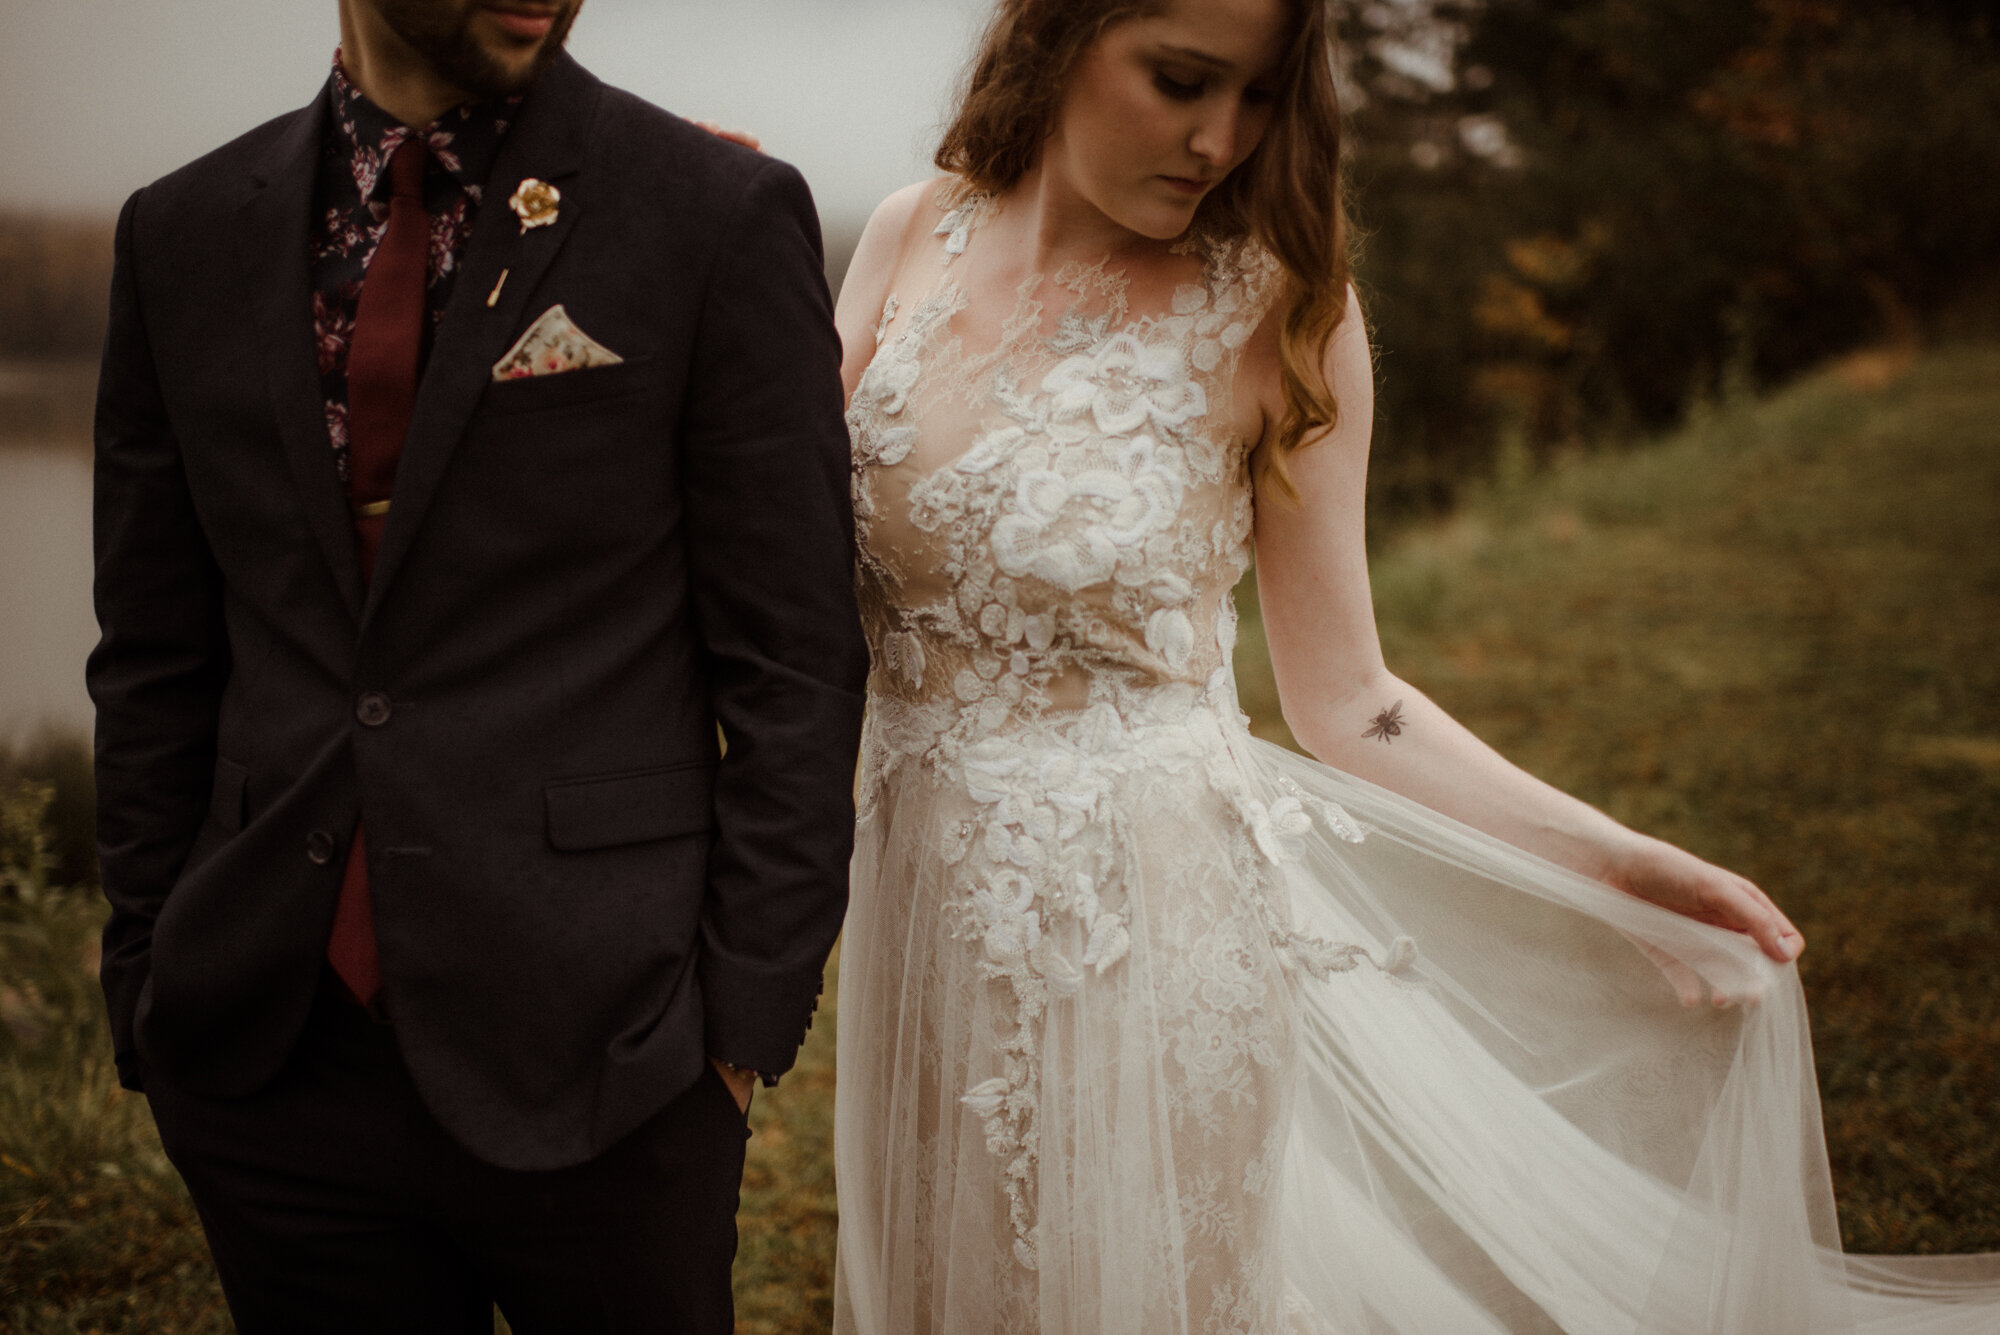 Sarah and Peyton - Rainy Autumn Wedding - Small Virginia Wedding - White Sails Creative Photography_13.jpg